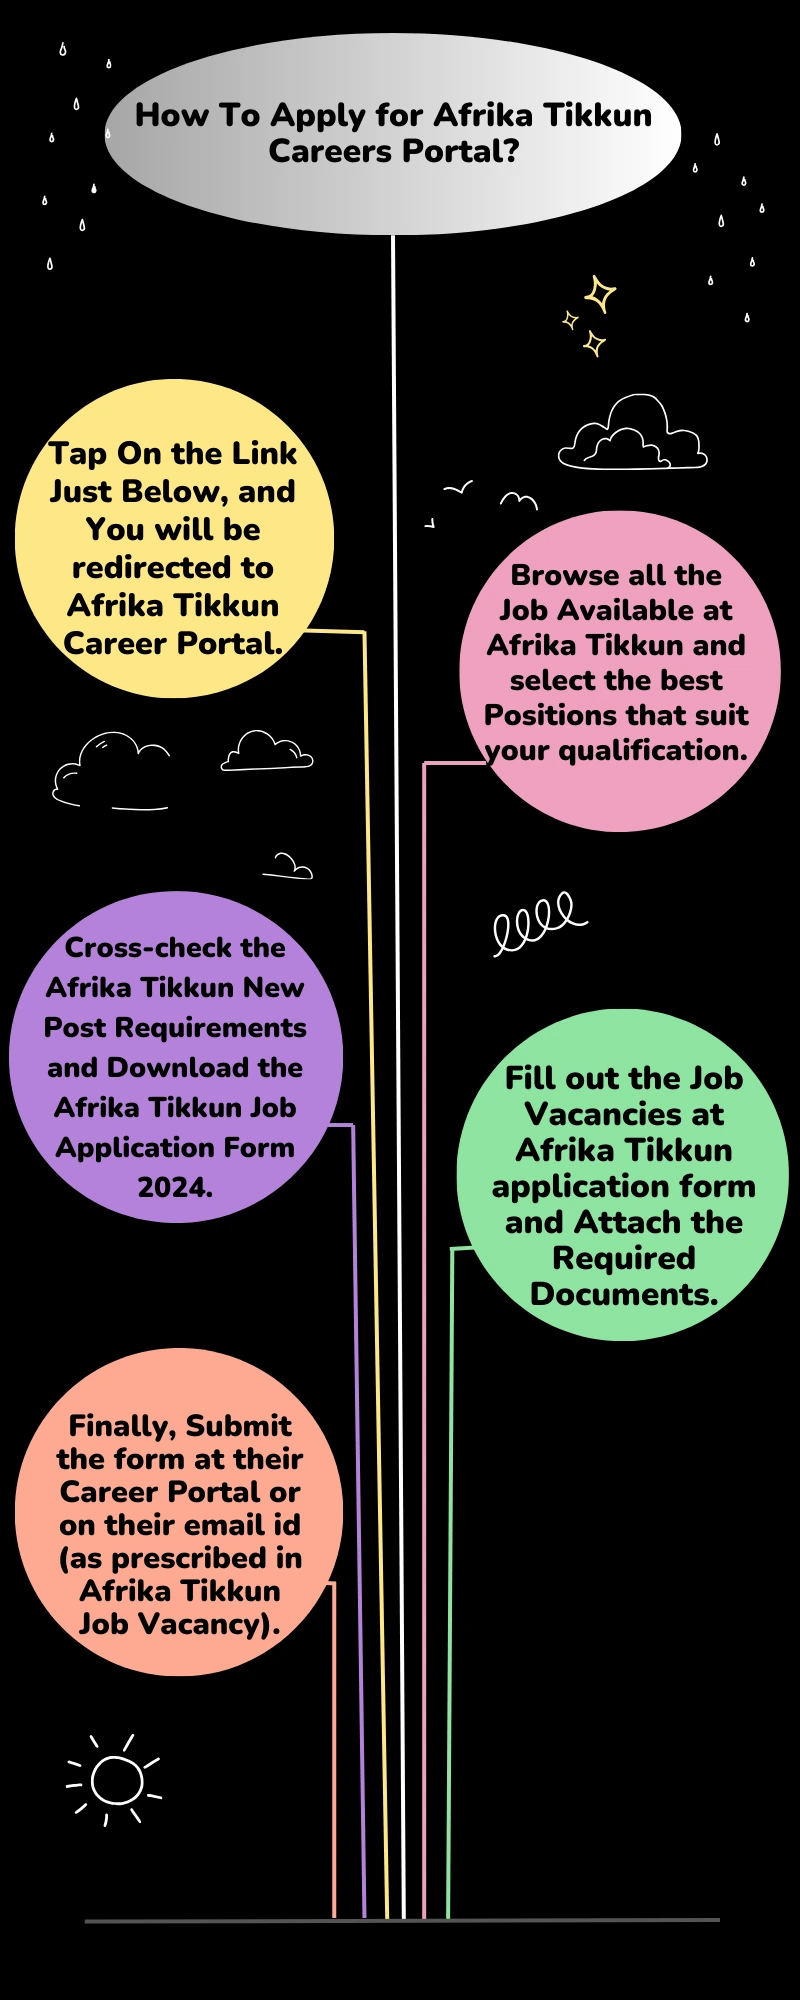 How To Apply for Afrika Tikkun Careers Portal?